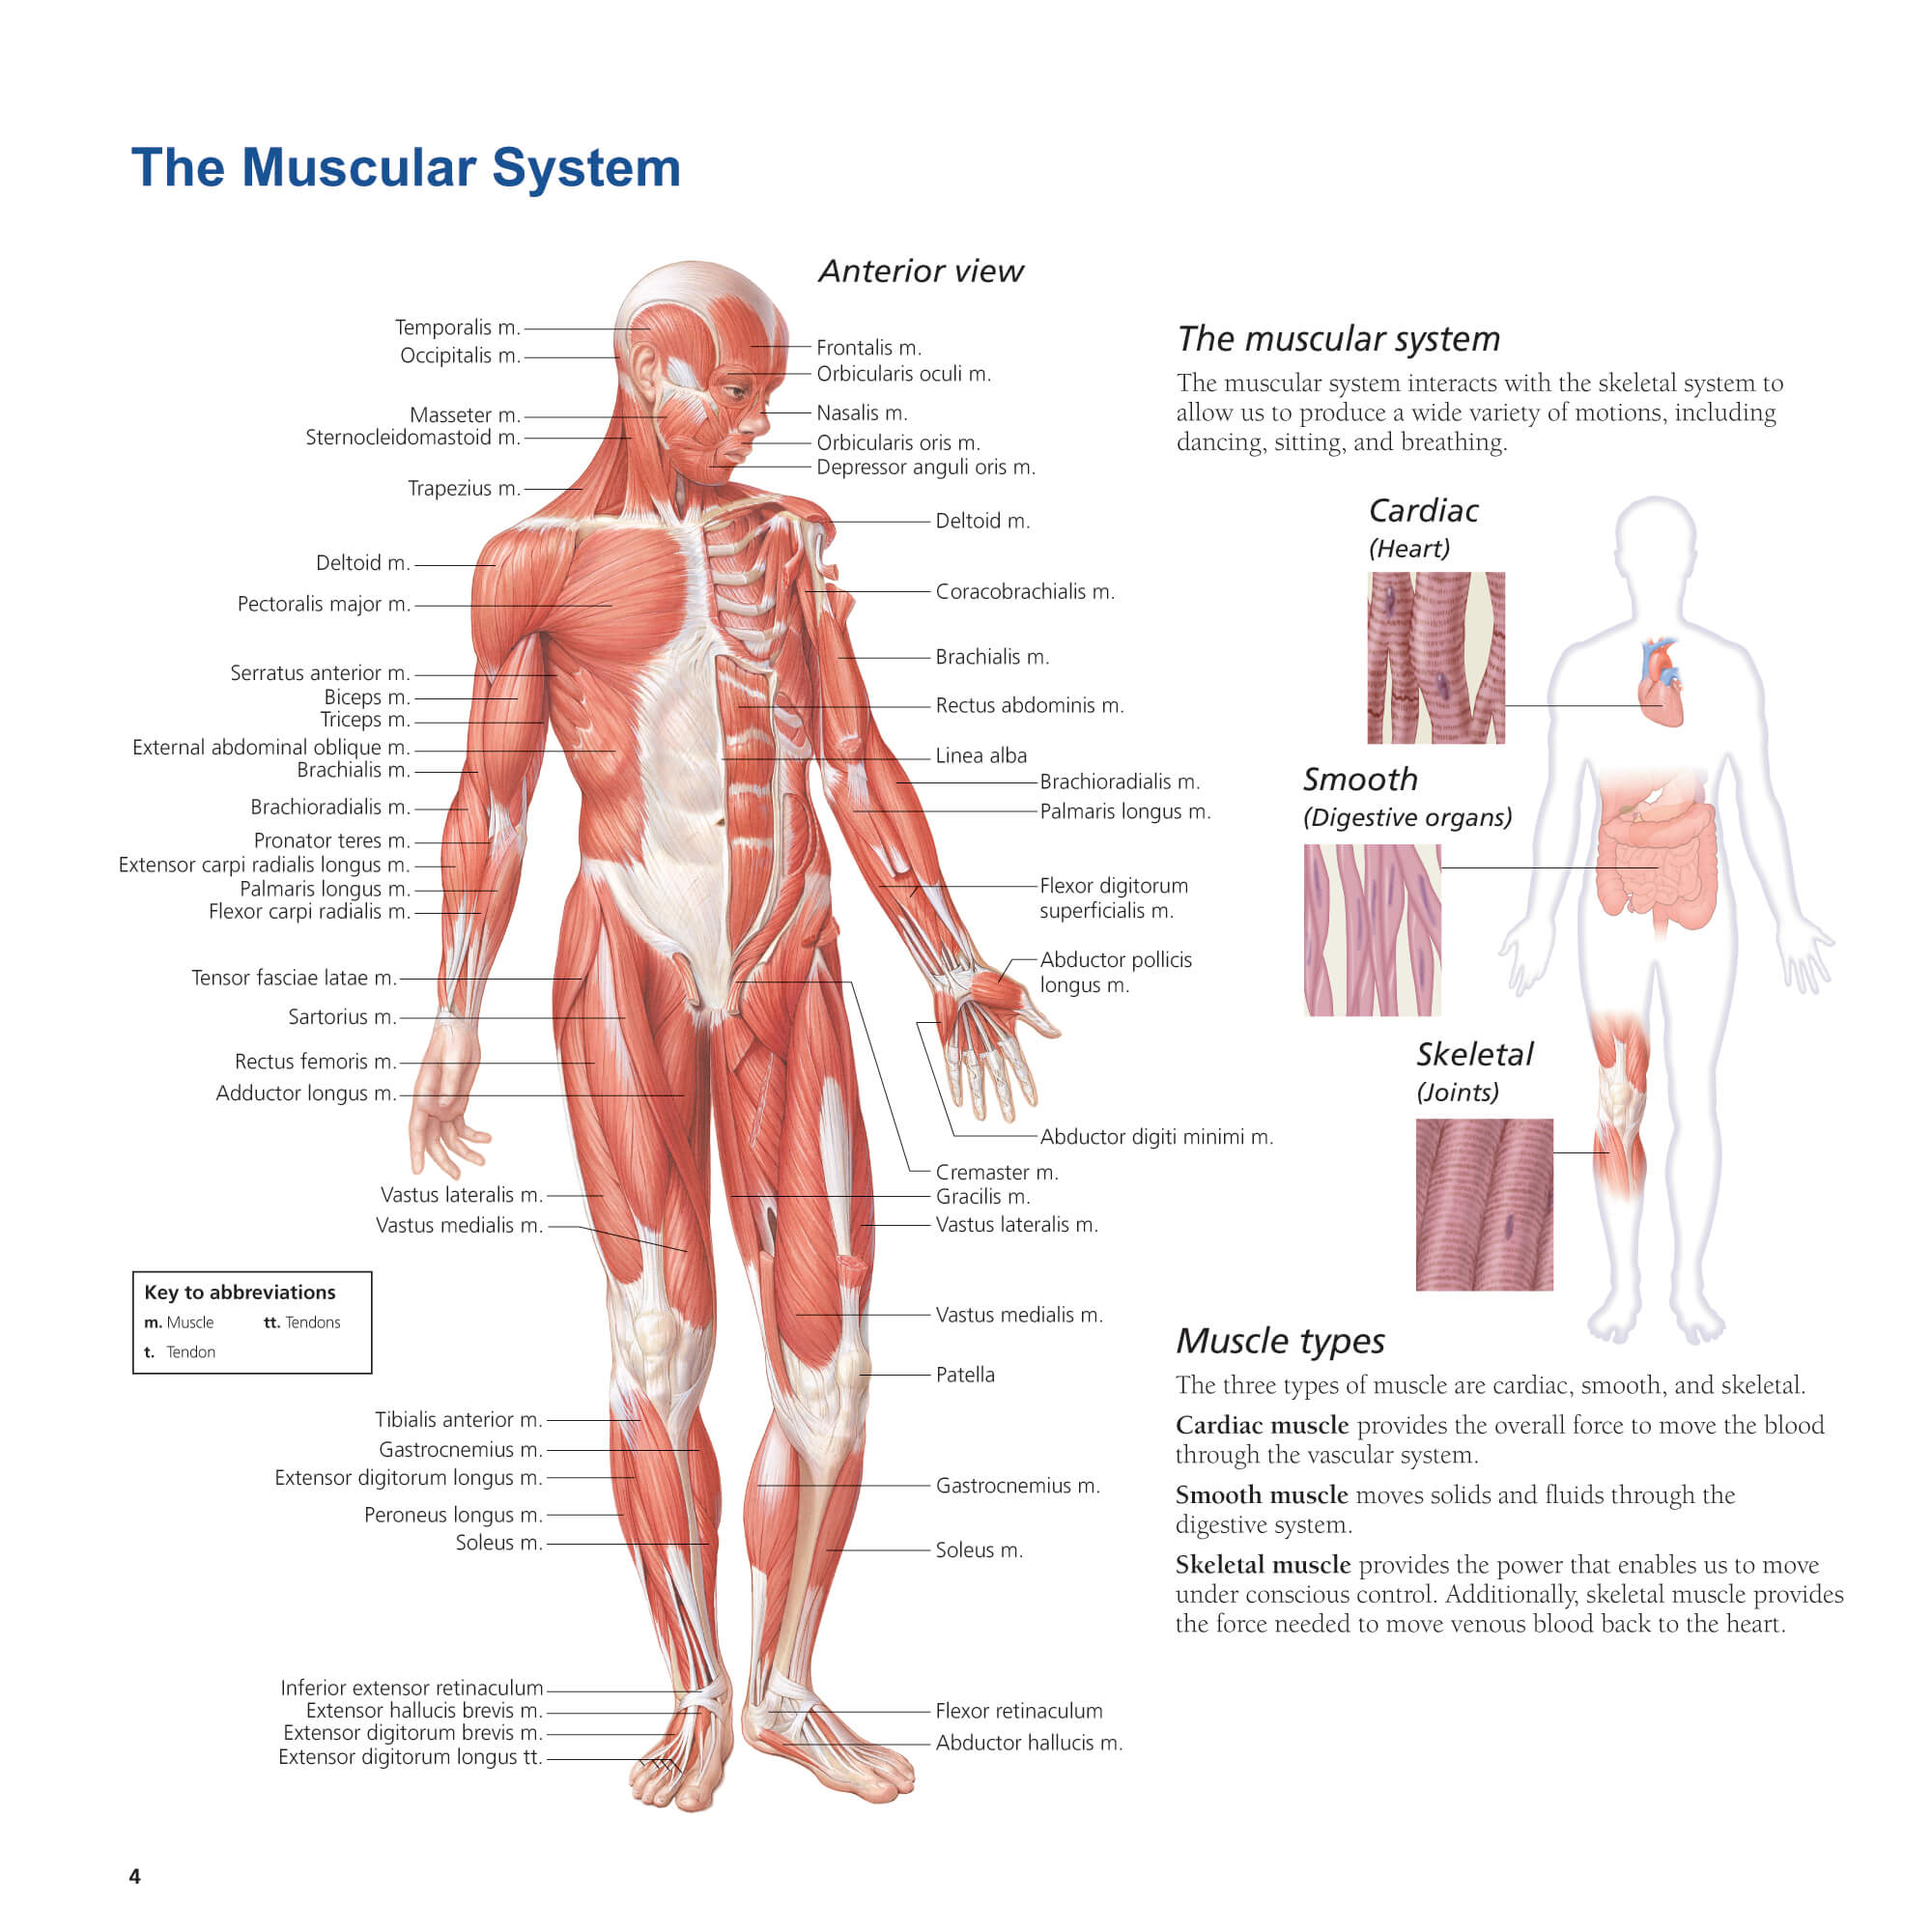 Плакат мышц. Мышечная система человека схема. Мышечная система человека анатомия плакат. Мышечная система человека атлас схема. Плакаты мышцы человека анатомия.